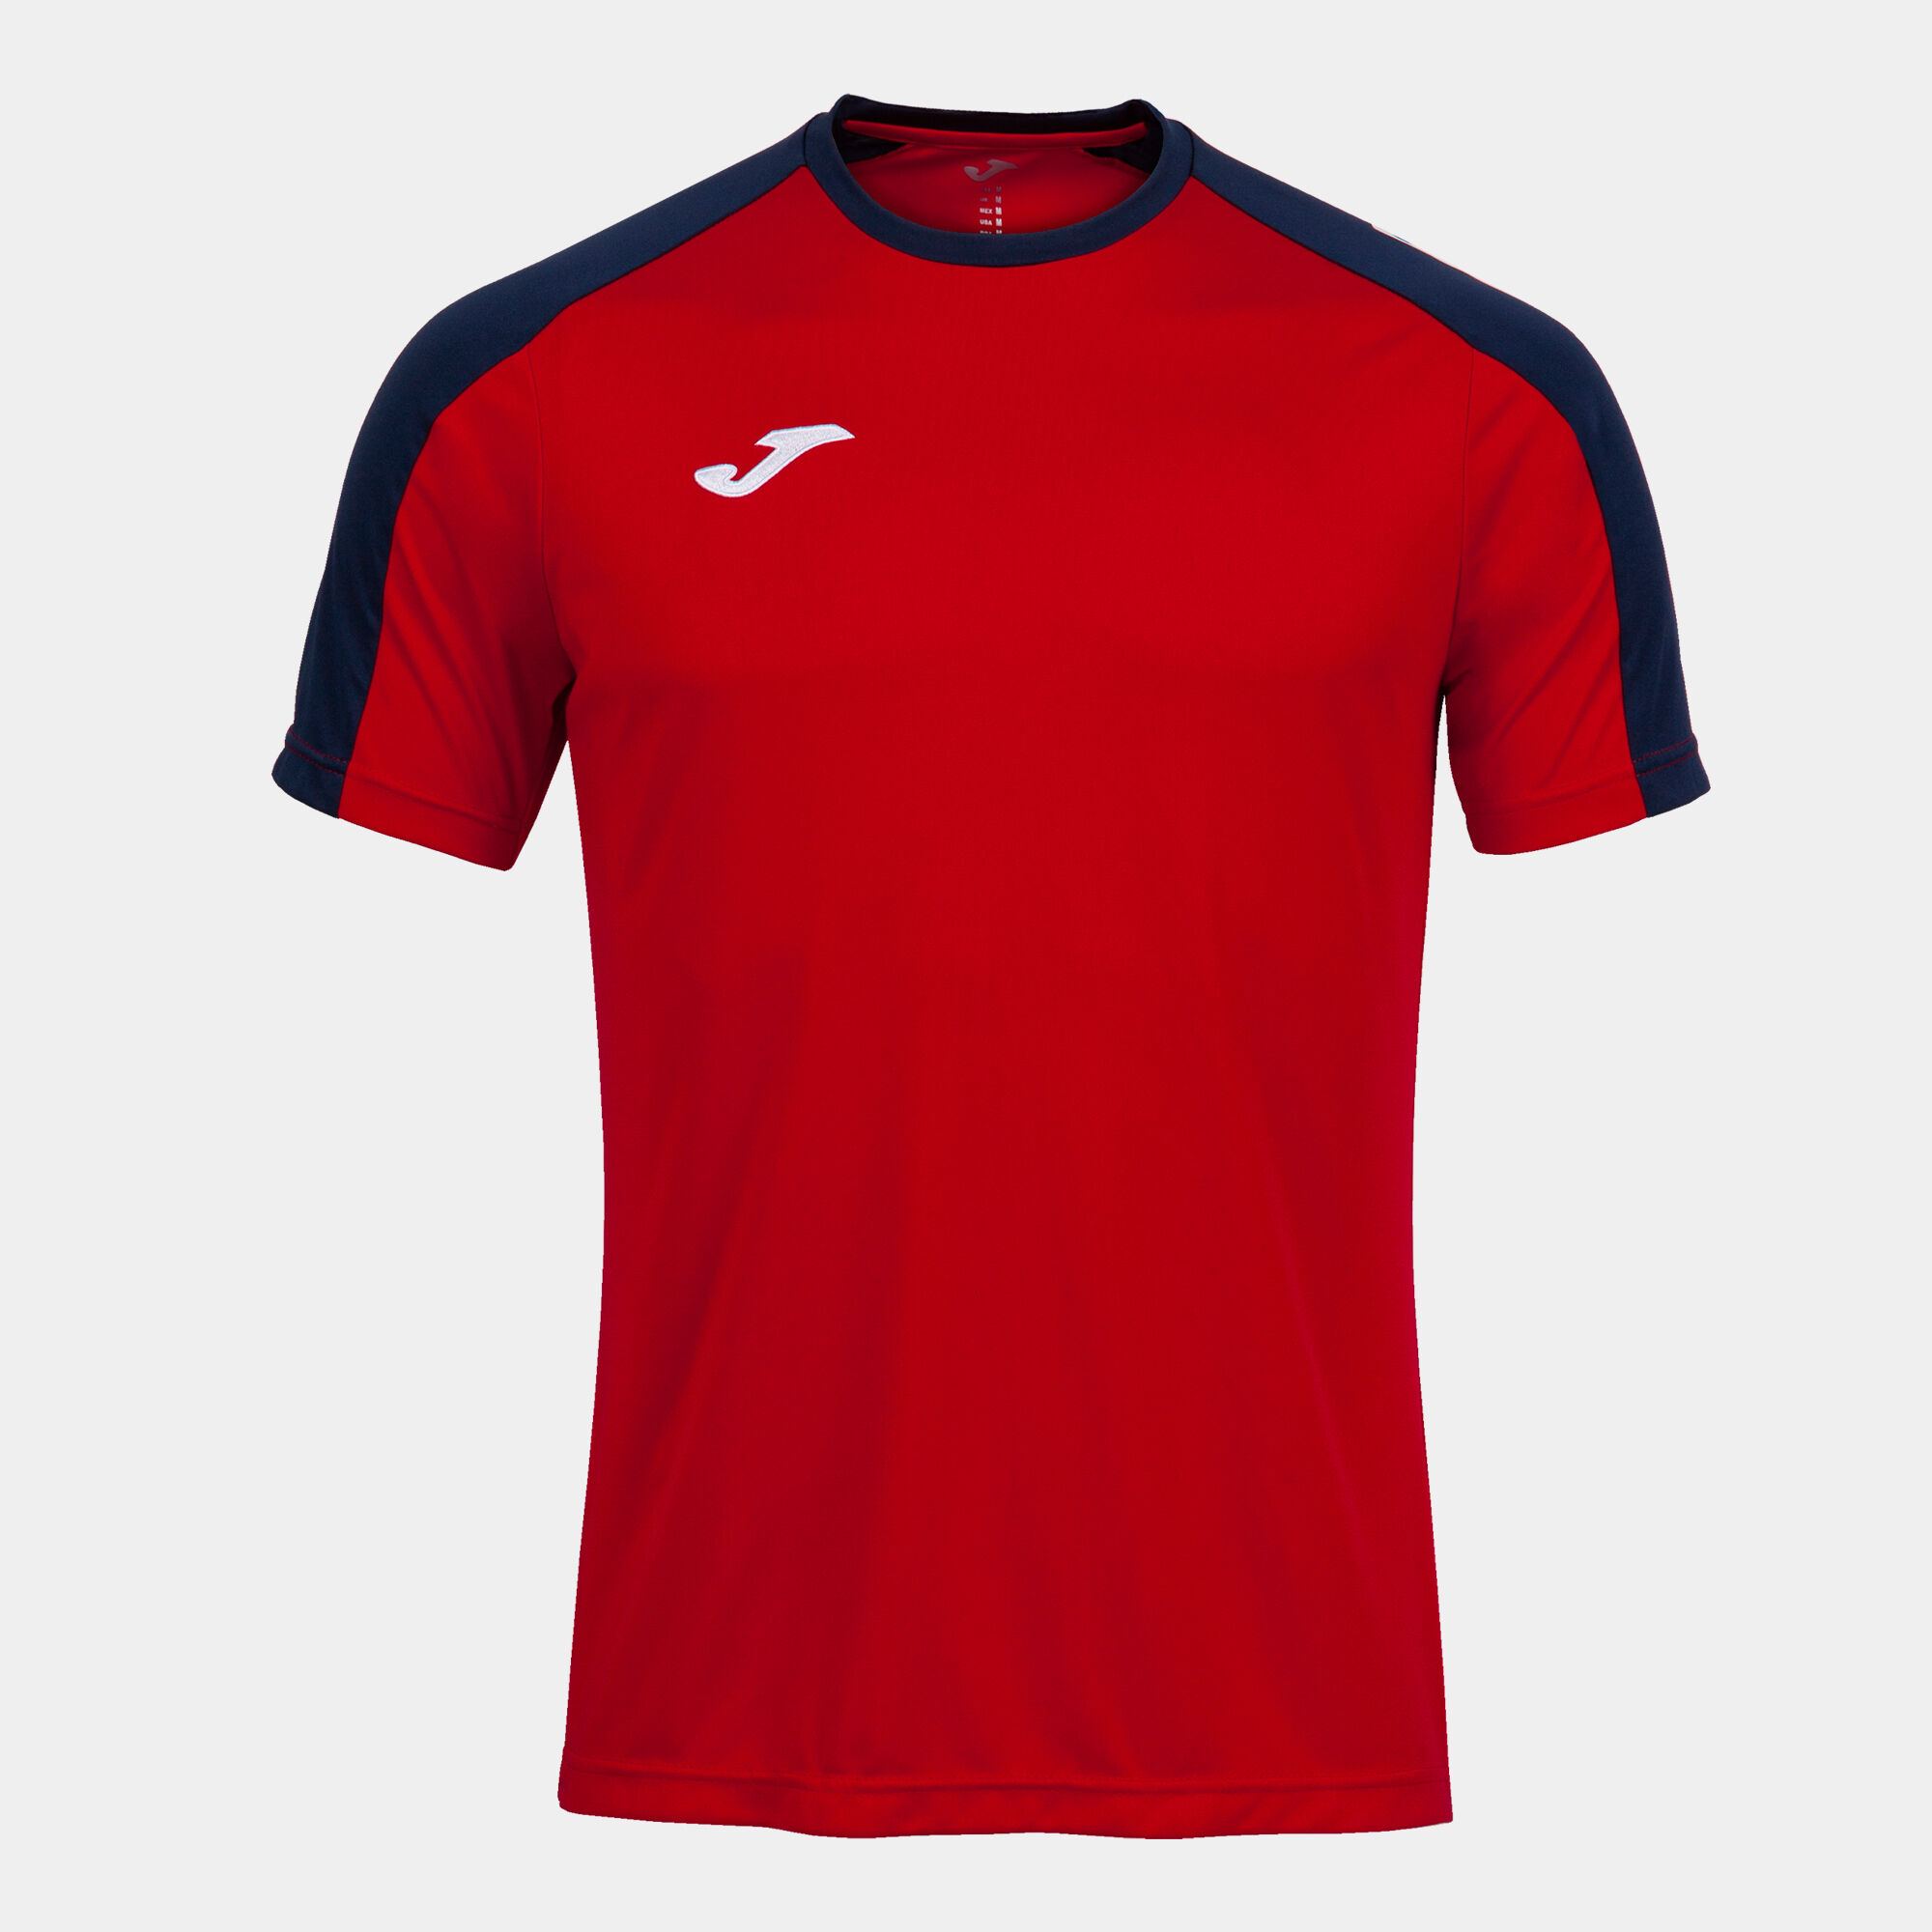 Shirt short sleeve man Eco Championship red navy blue